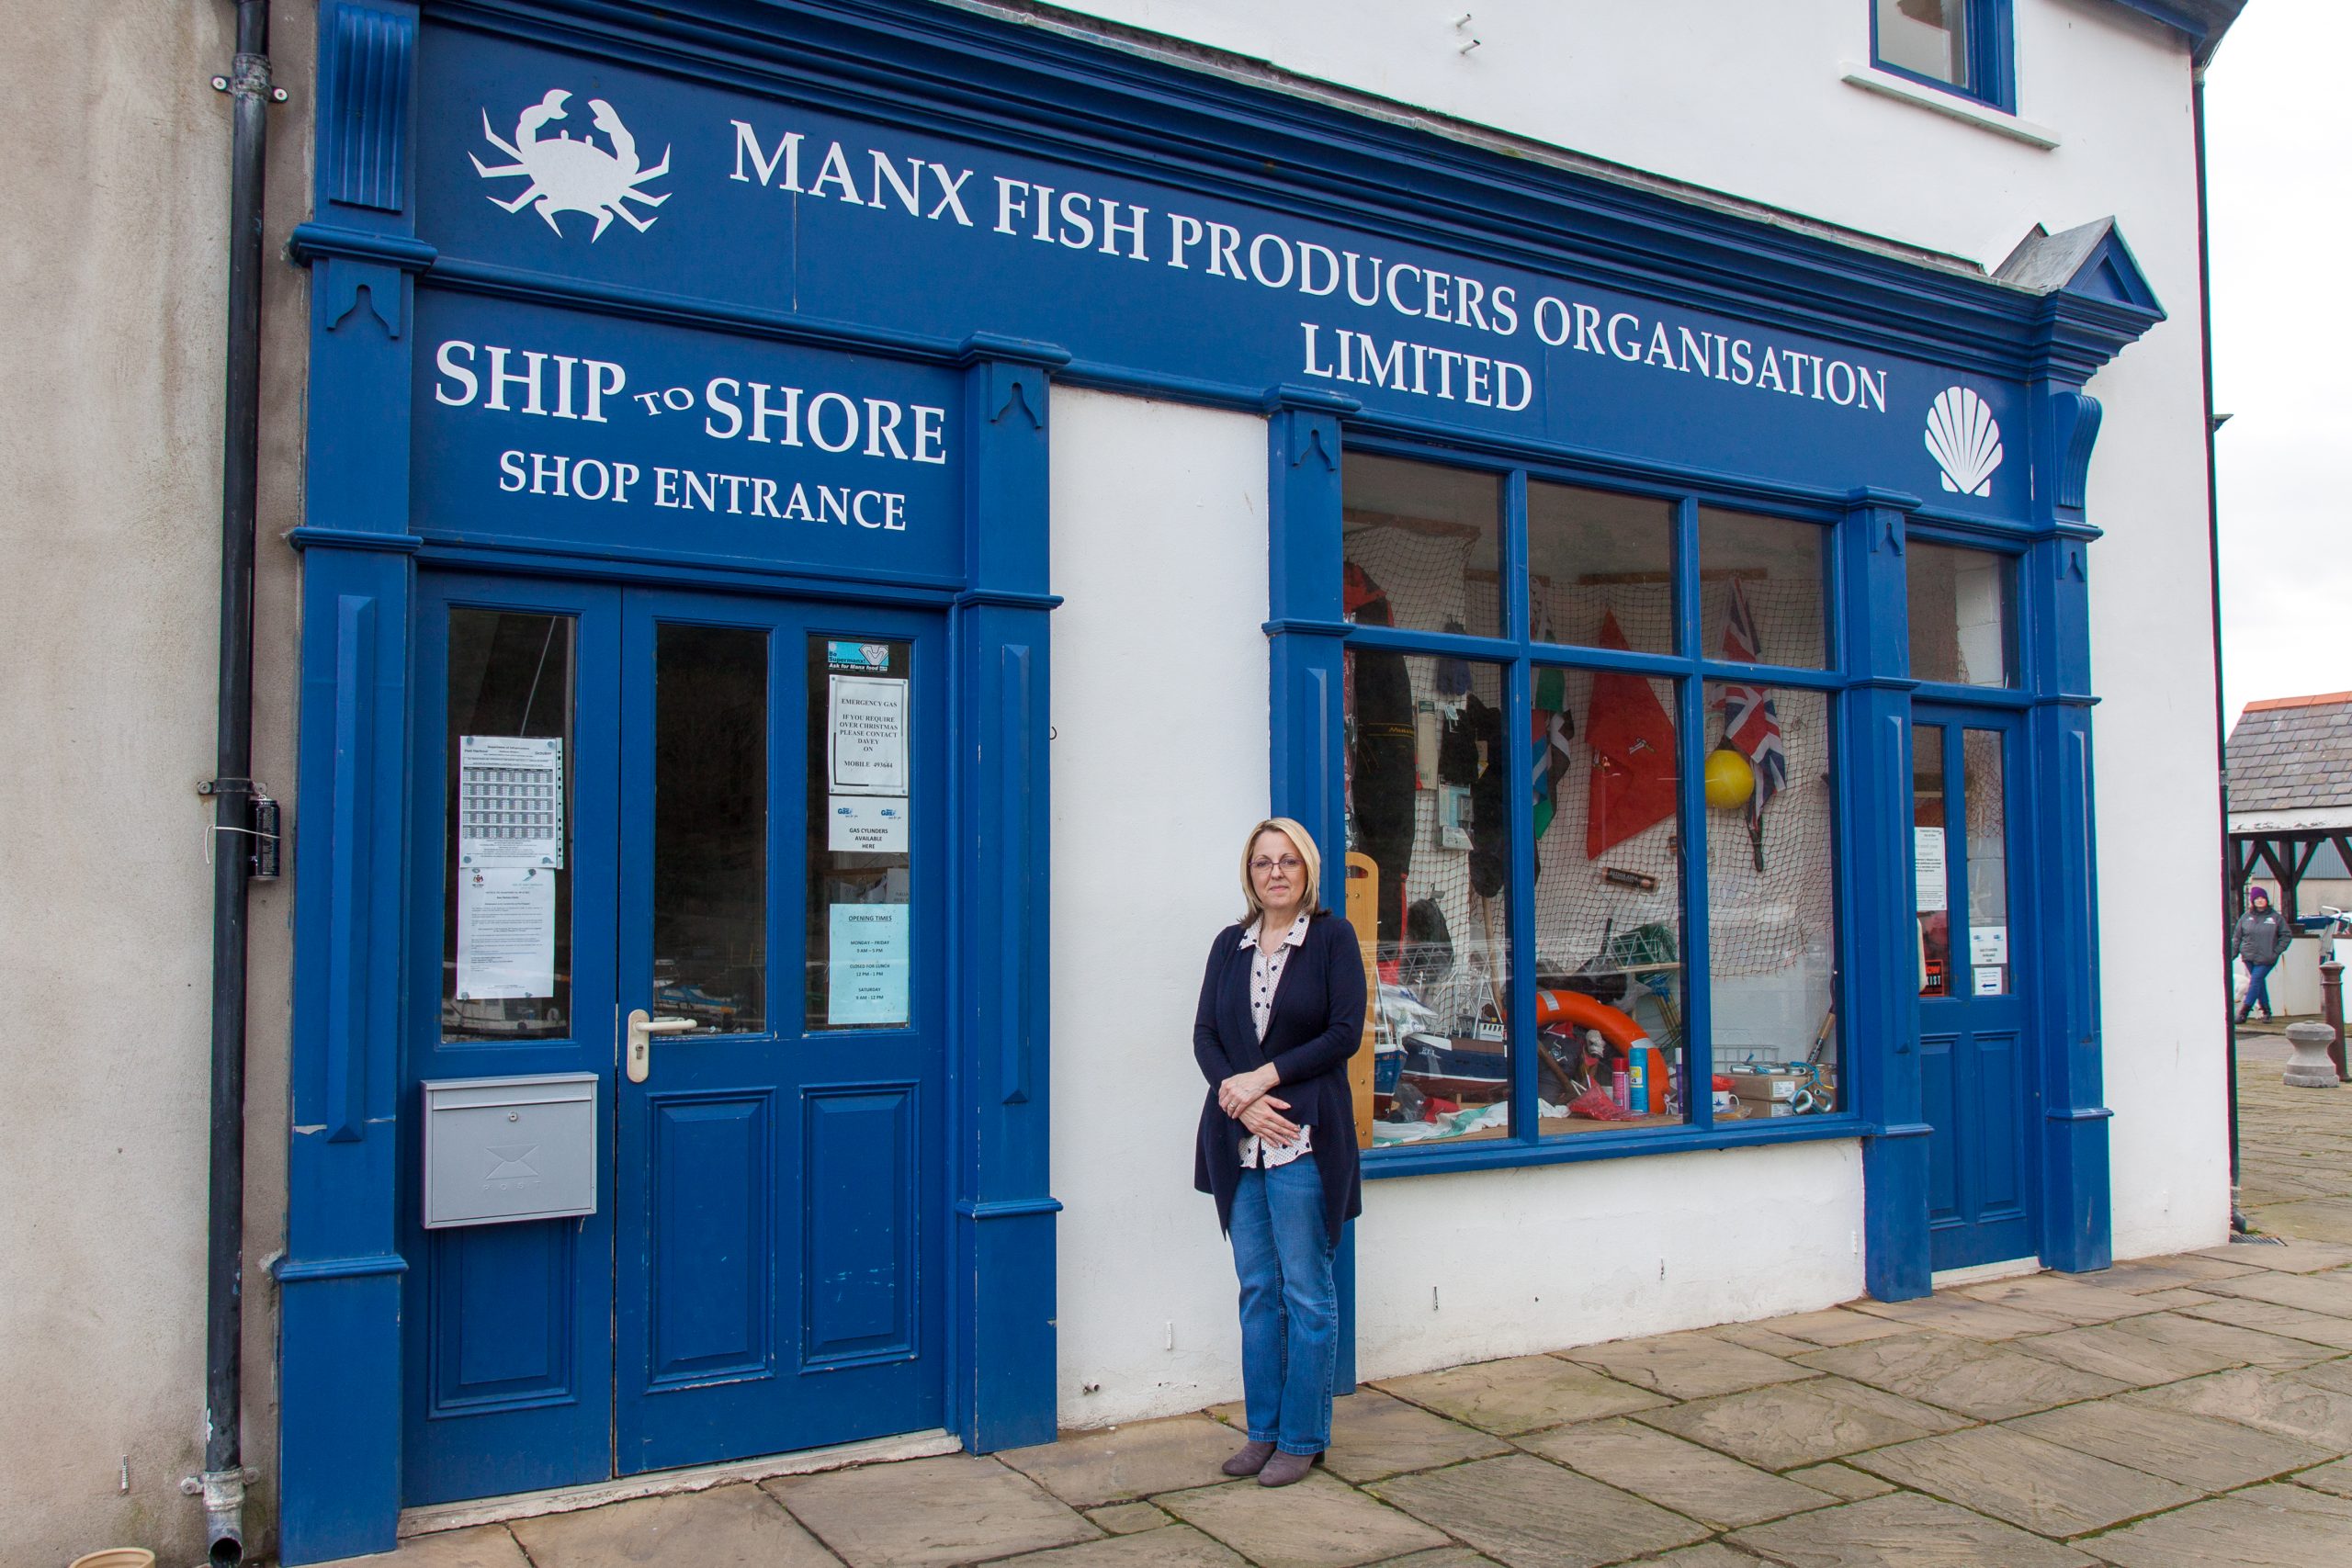 Manx Fish Producer's Organisation Ltd